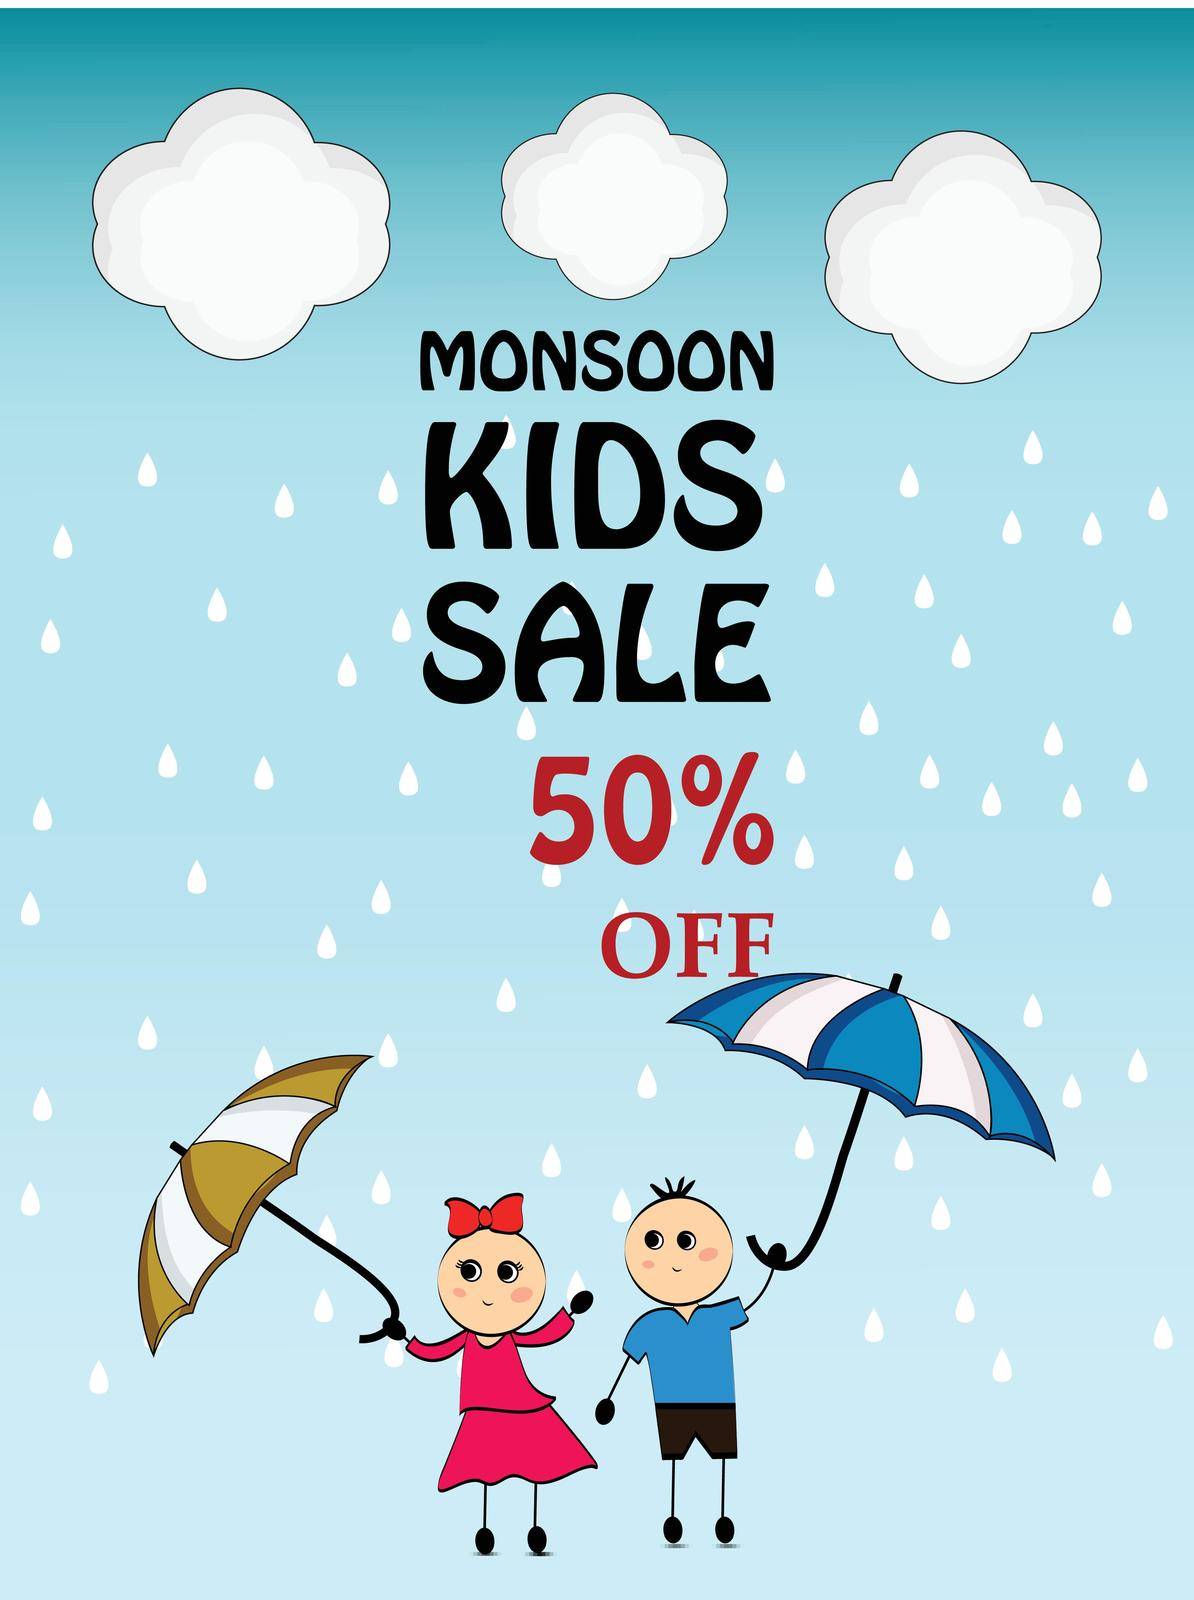 Monsoon season background by vectorworld